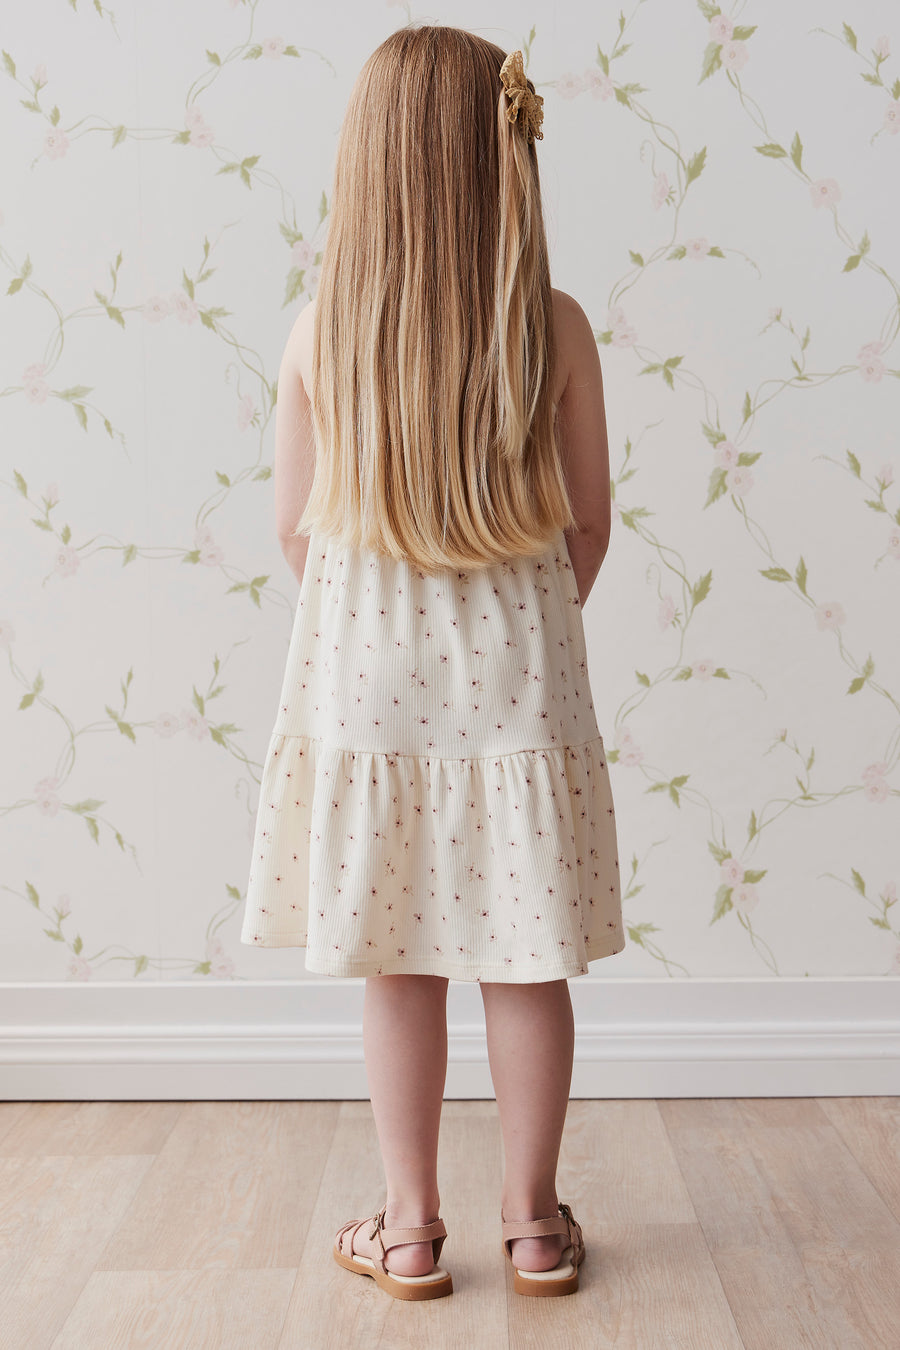 Organic Cotton Fine Rib Matilda Dress - Simple Flowers Egret Childrens Dress from Jamie Kay USA